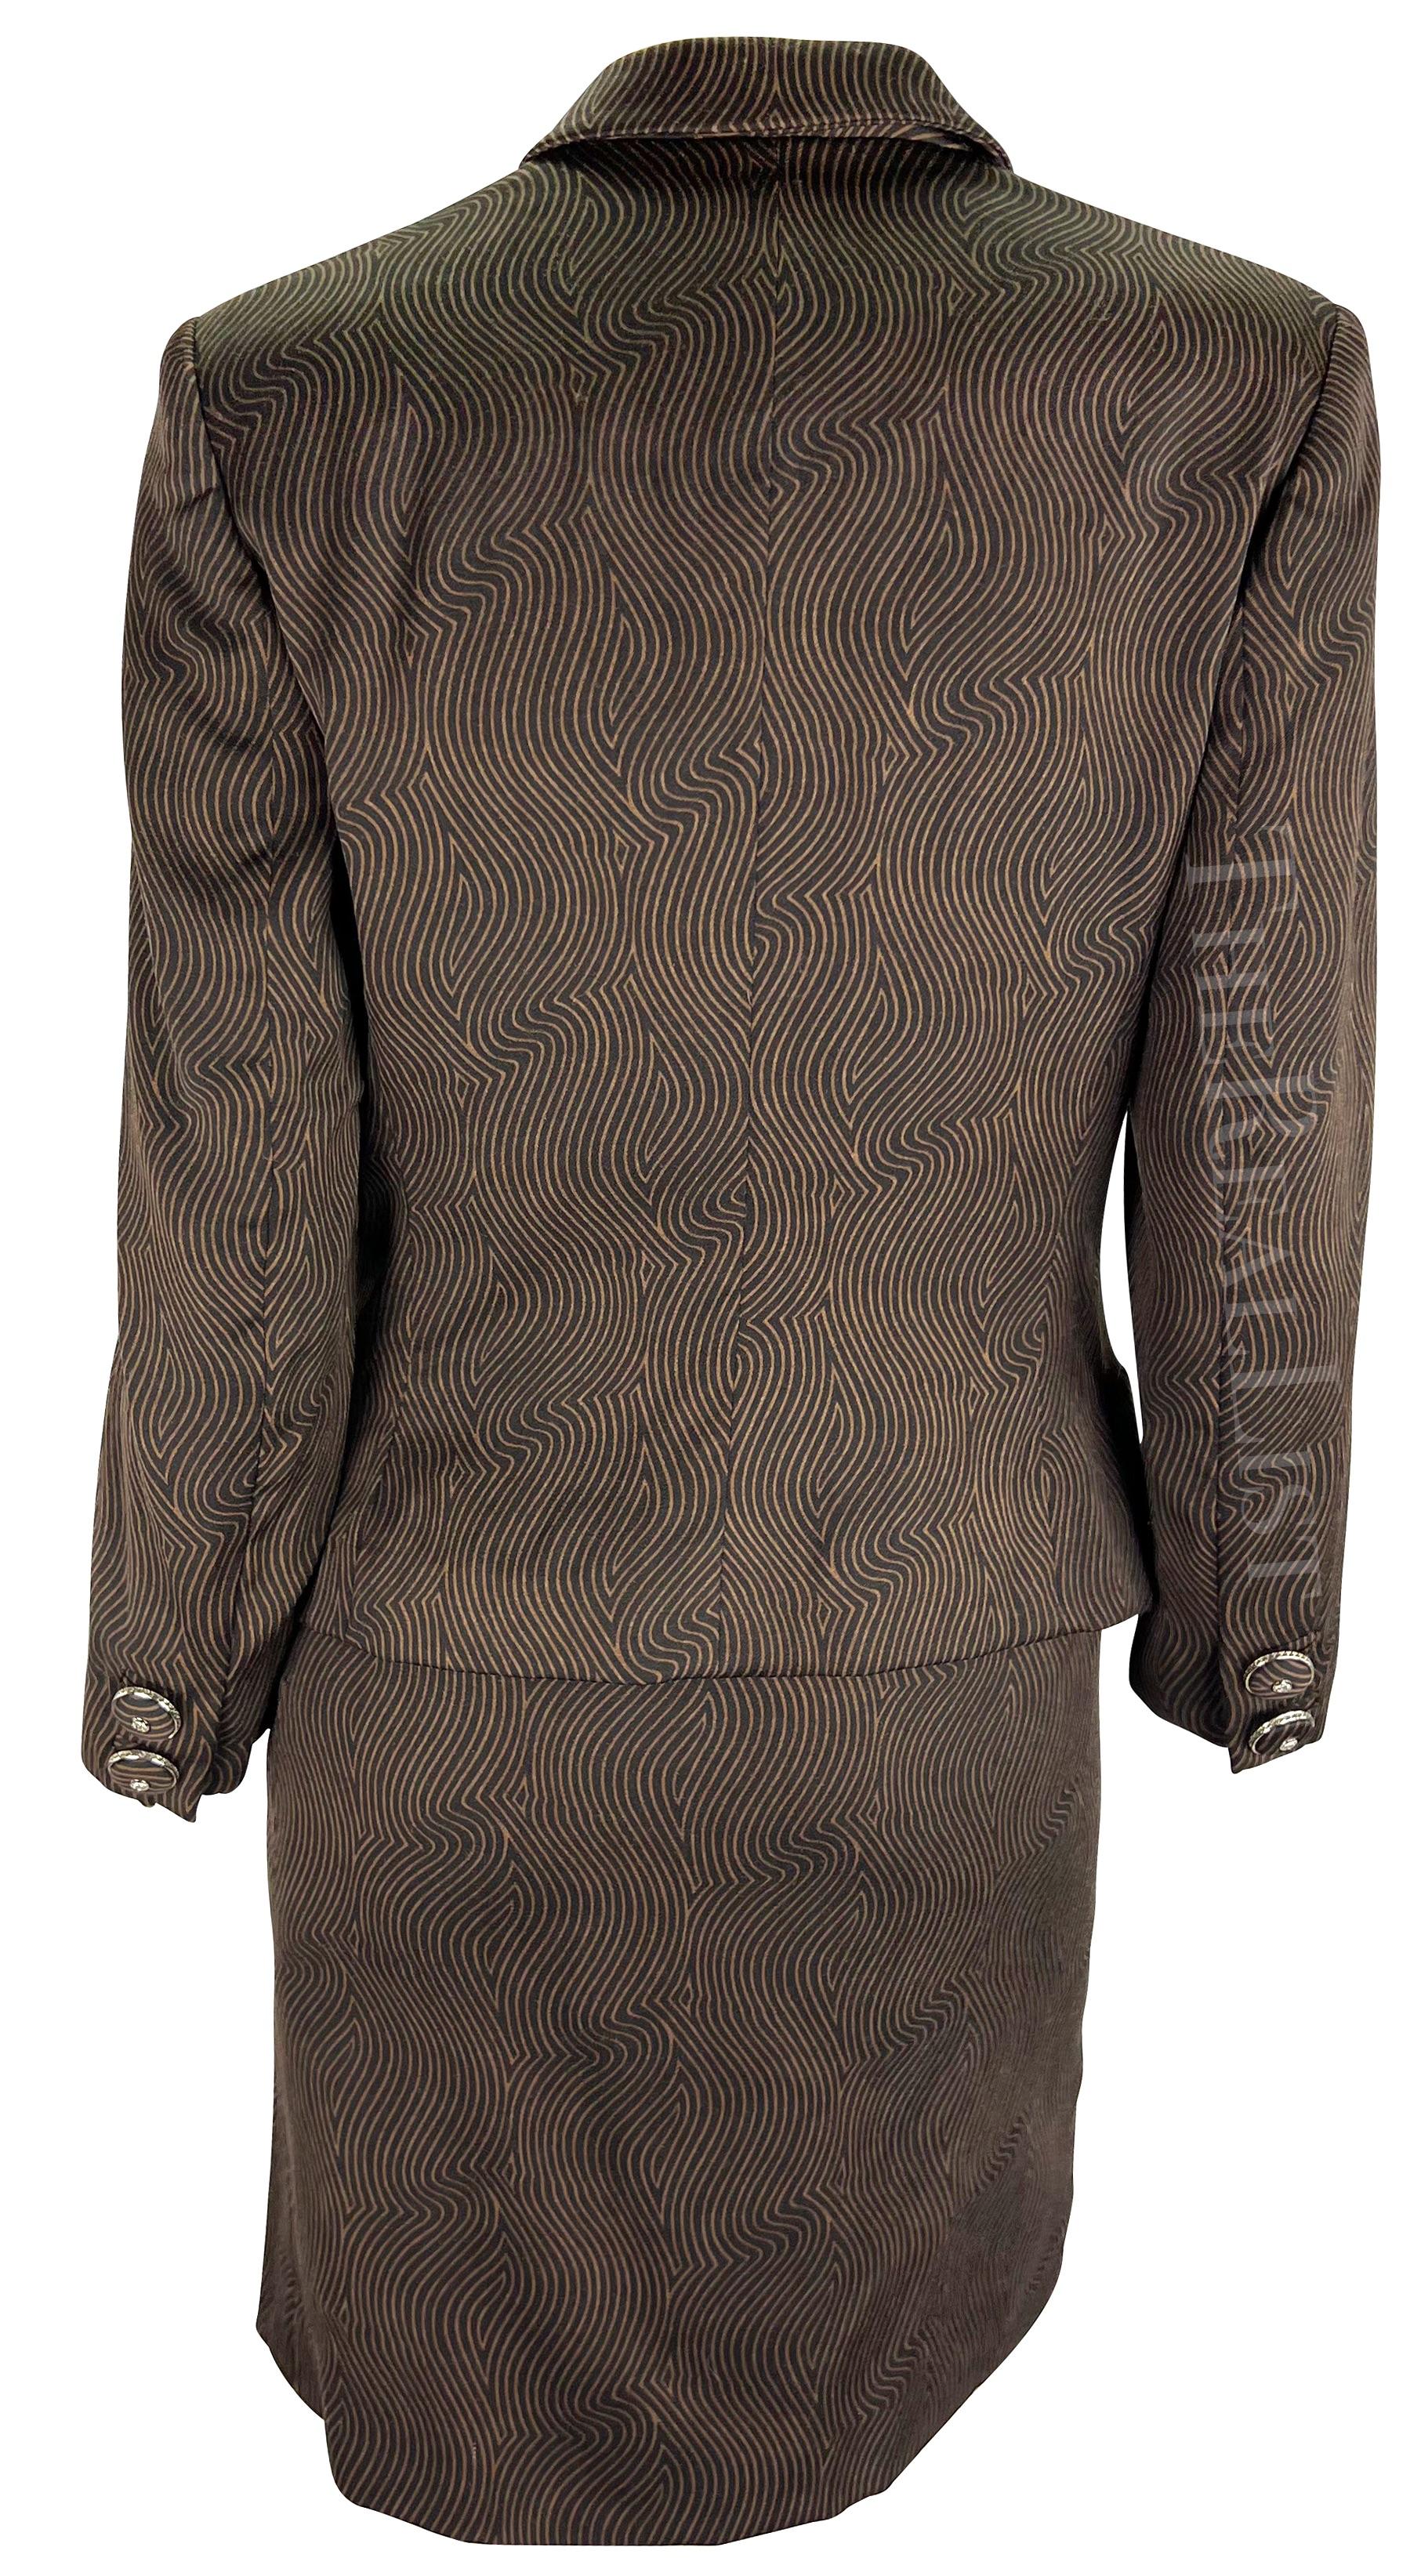 S/S 1996 Gianni Versace Black Brown Abstract Op-Art Print Medusa Belt Skirt Suit For Sale 1